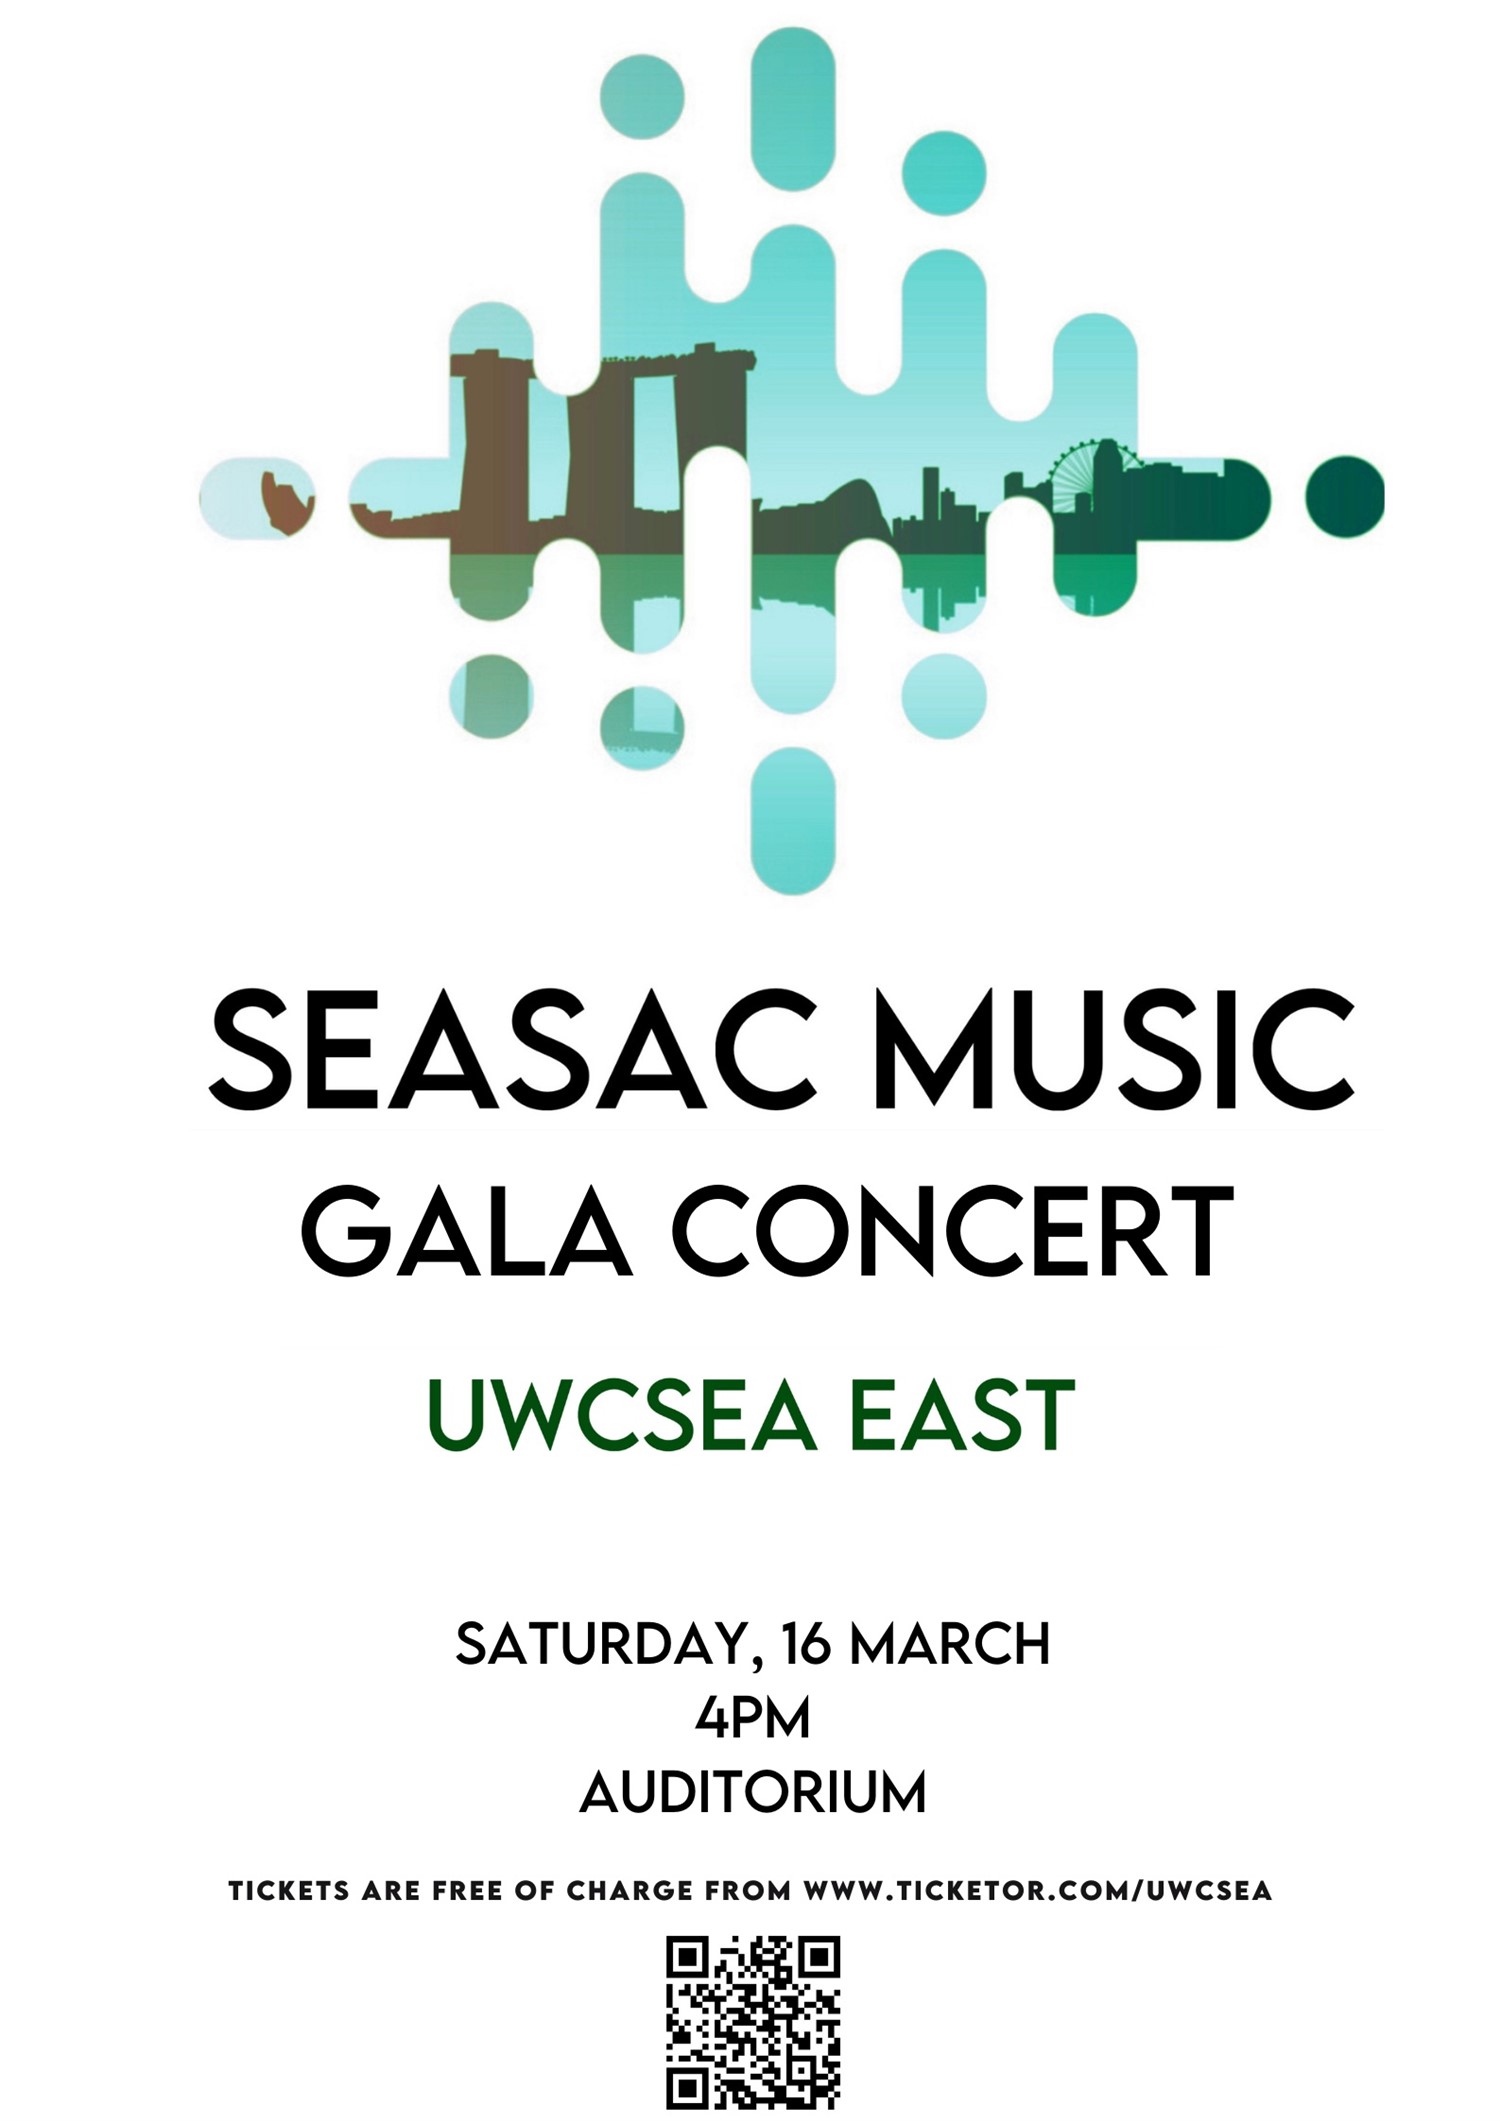 UWCSEA East Music presents: SEASAC Music Festival Gala Concert  on Mar 16, 16:00@UWCSEA East Auditorium - Pick a seat, Buy tickets and Get information on UWCSEA Ticket Hub uwcsea